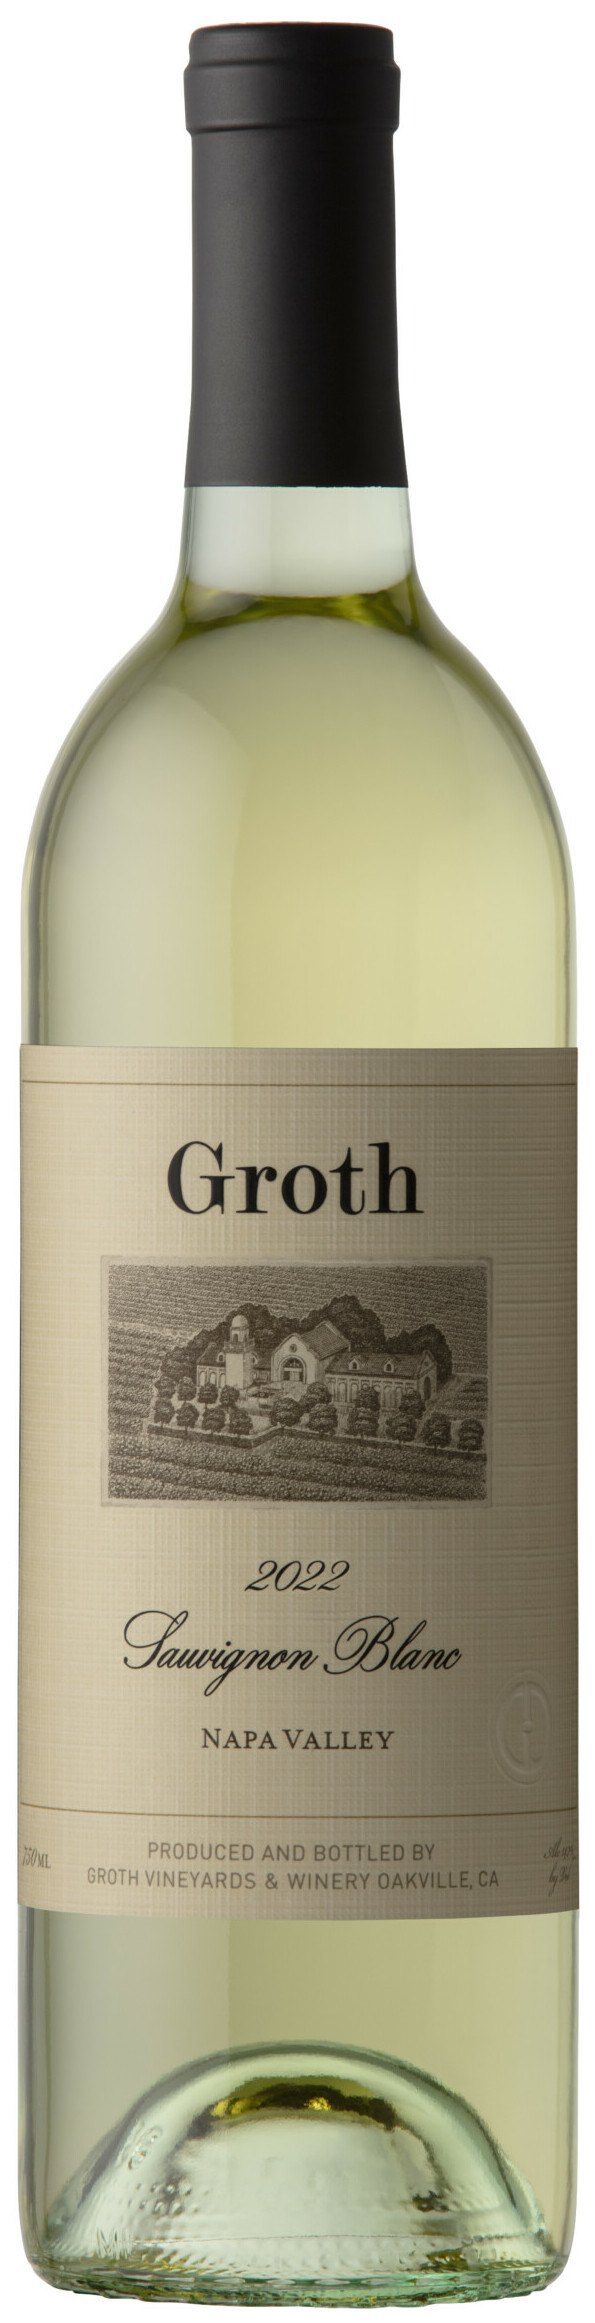 Groth-2022-Napa-Valley-Sauvignon-Blanc-bottle-shot